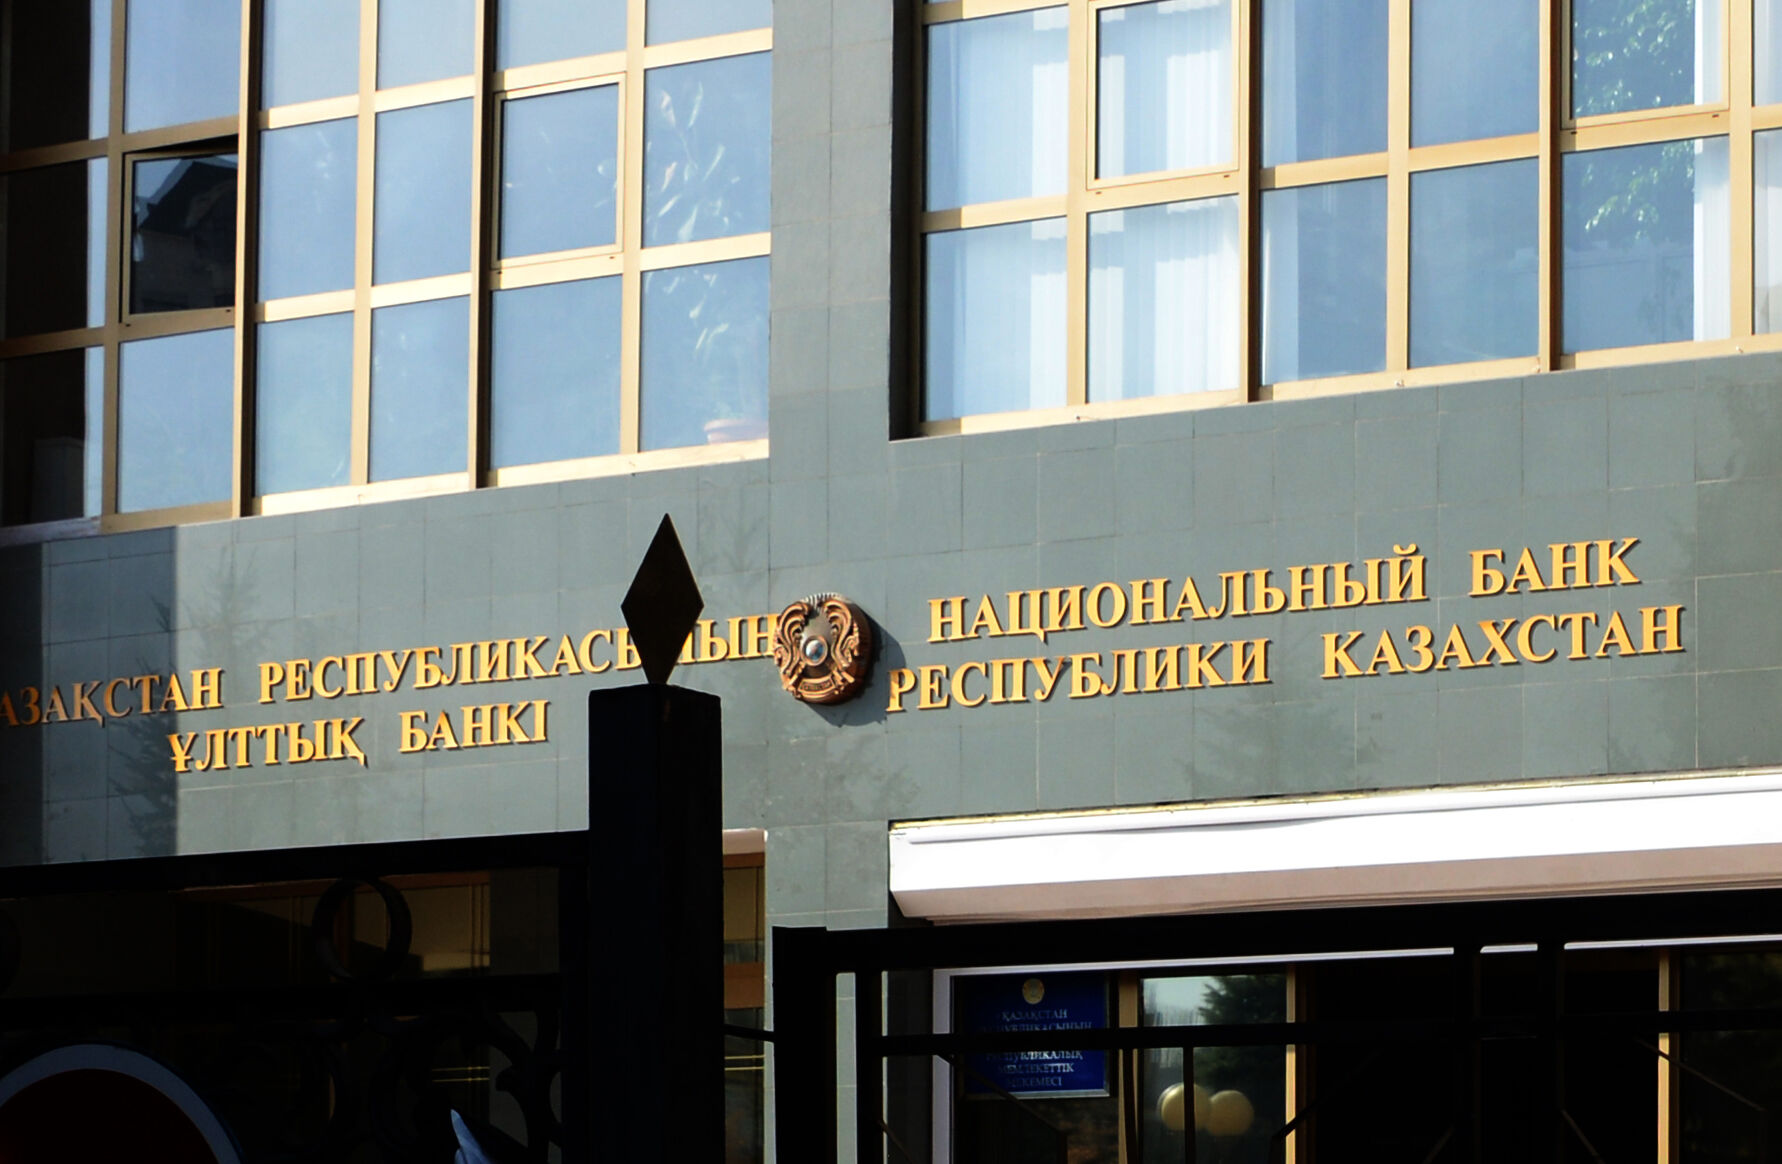 Сайт нац банк казахстан. Банк РК. Банки Казахстана. Нацбанк РК. Национальный банк.